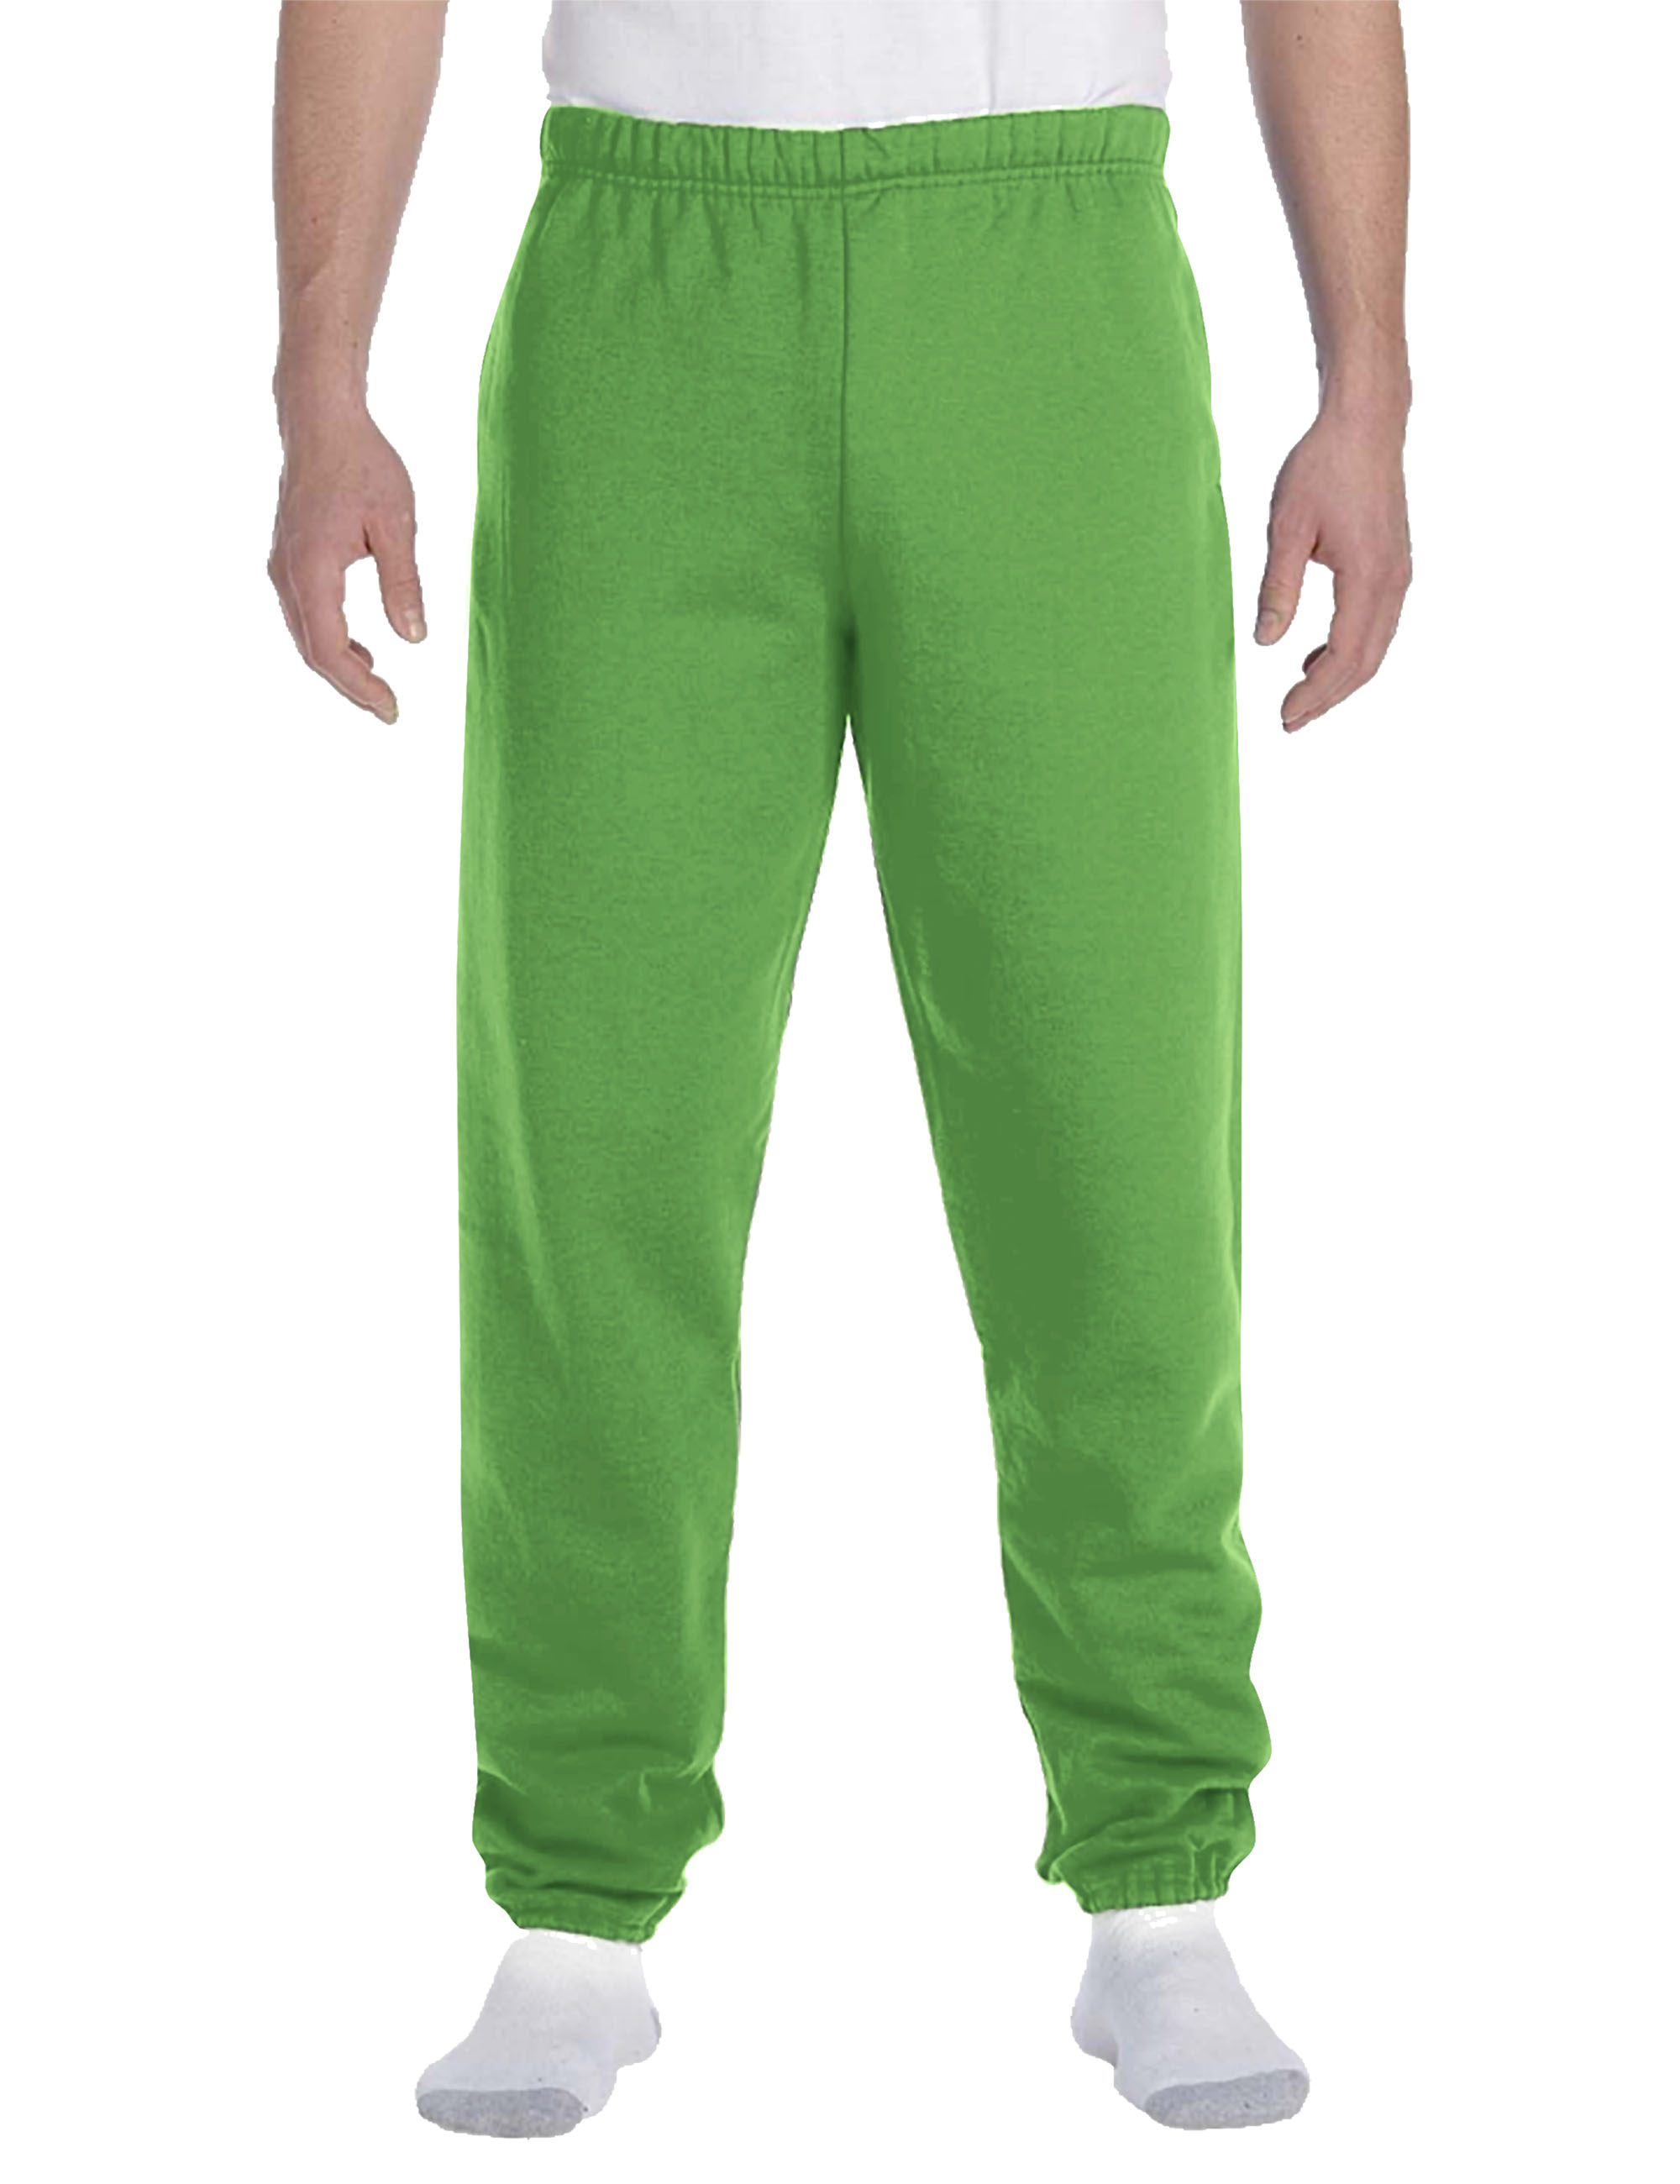 Ma Croix Men's Elastic Bottom Sweatpants with Pocket - image 4 of 5